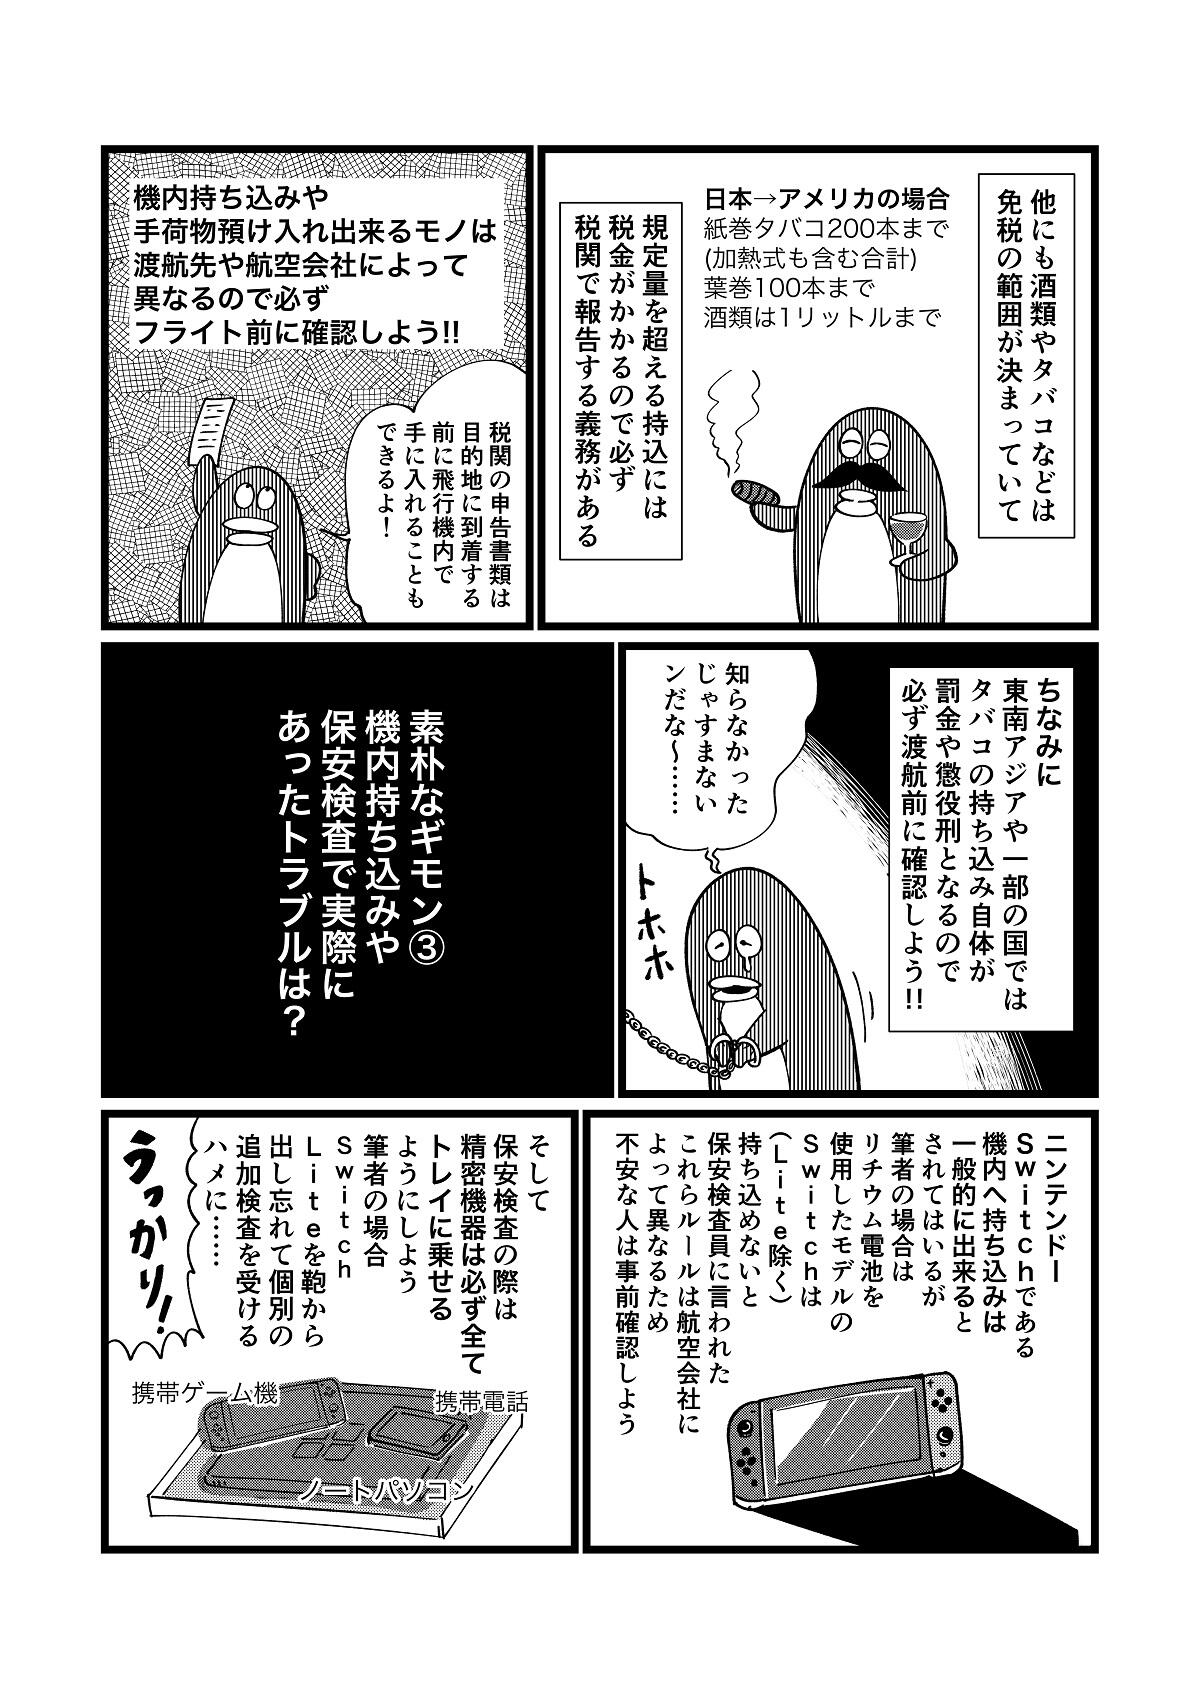 https://www.ryugaku.co.jp/column/images/jawamura23_3_1200.jpg